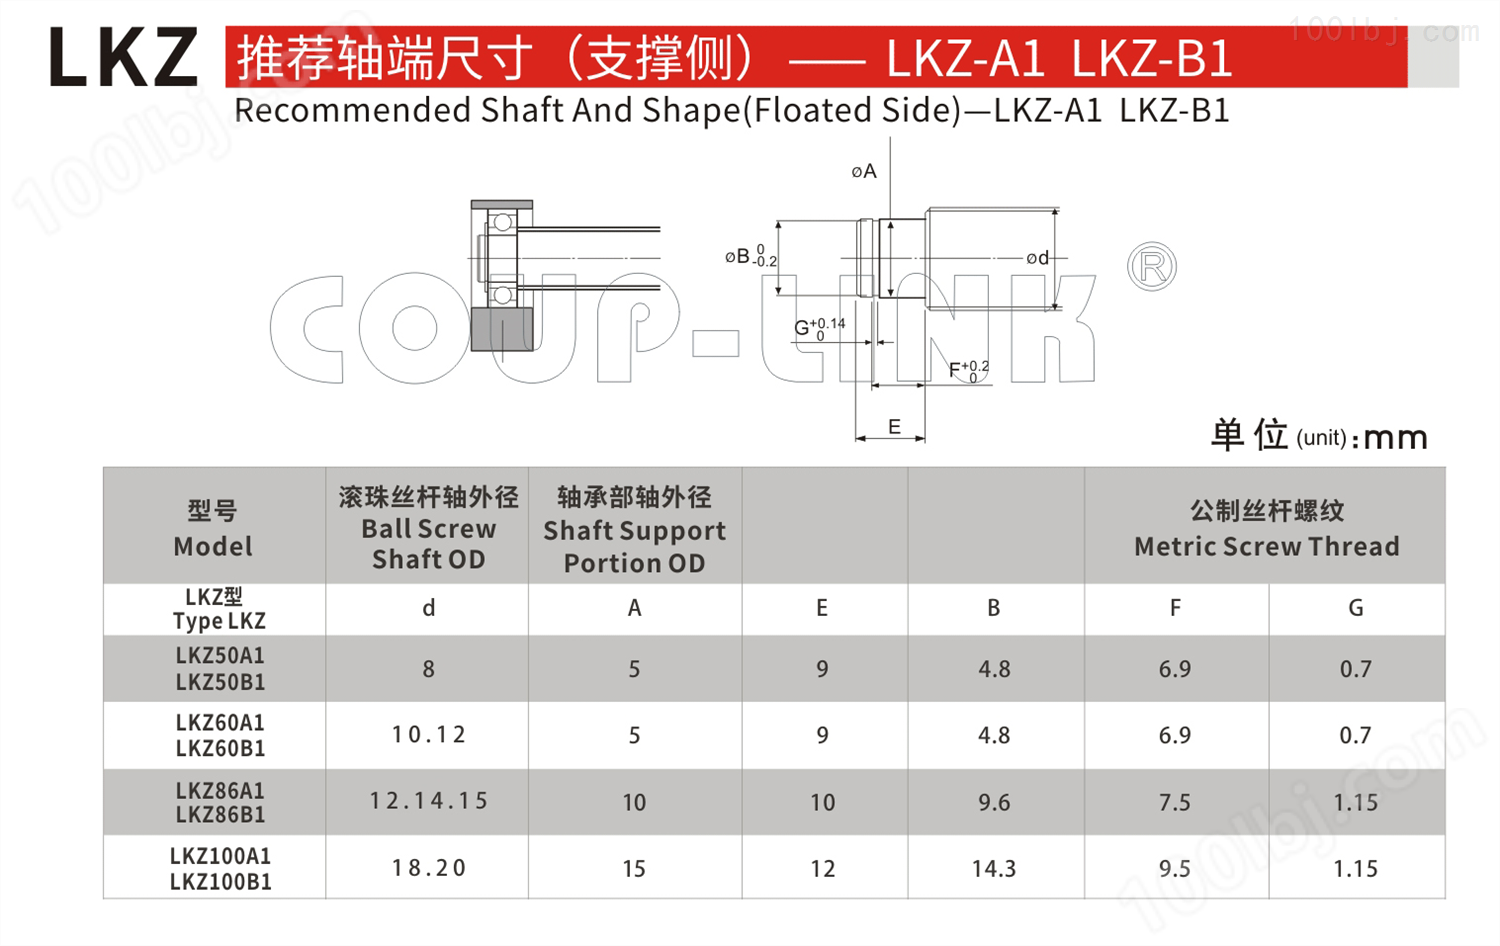 LKZ-B 固定侧_联轴器种类-广州菱科自动化设备有限公司